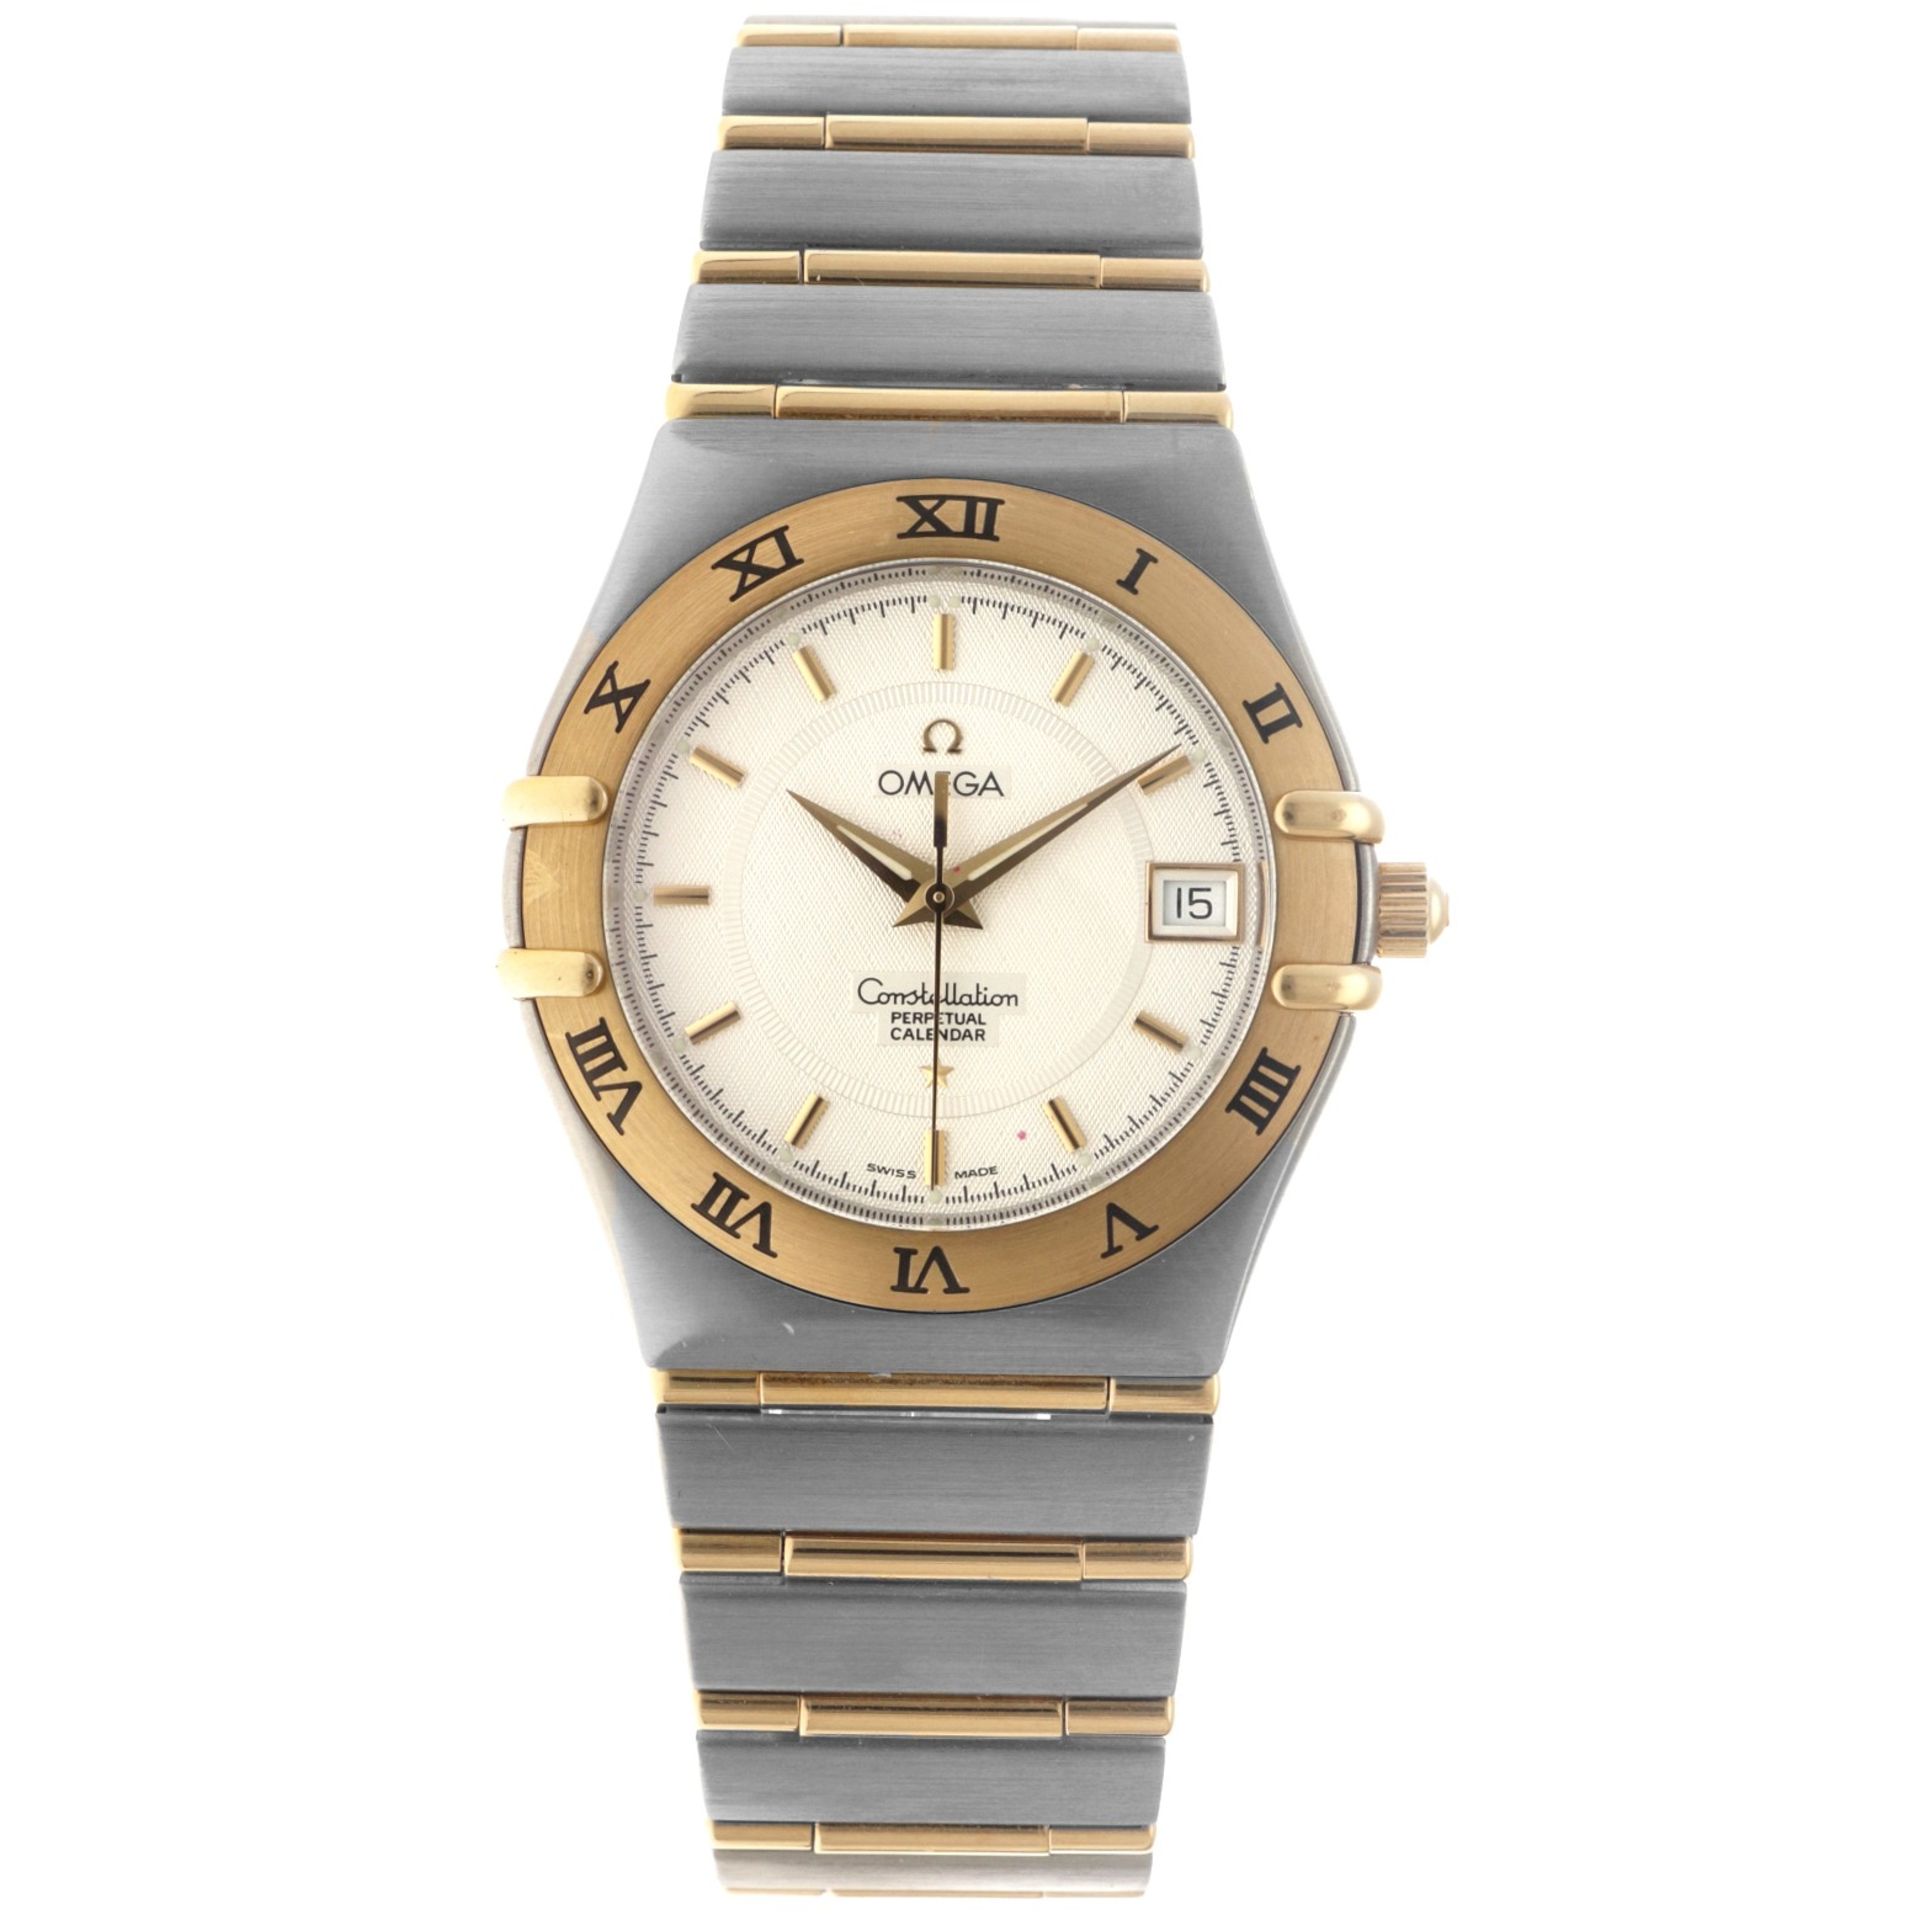 No Reserve - Omega Constellation Perpetual Calendar 1252.3000 - Men's watch - 2001.